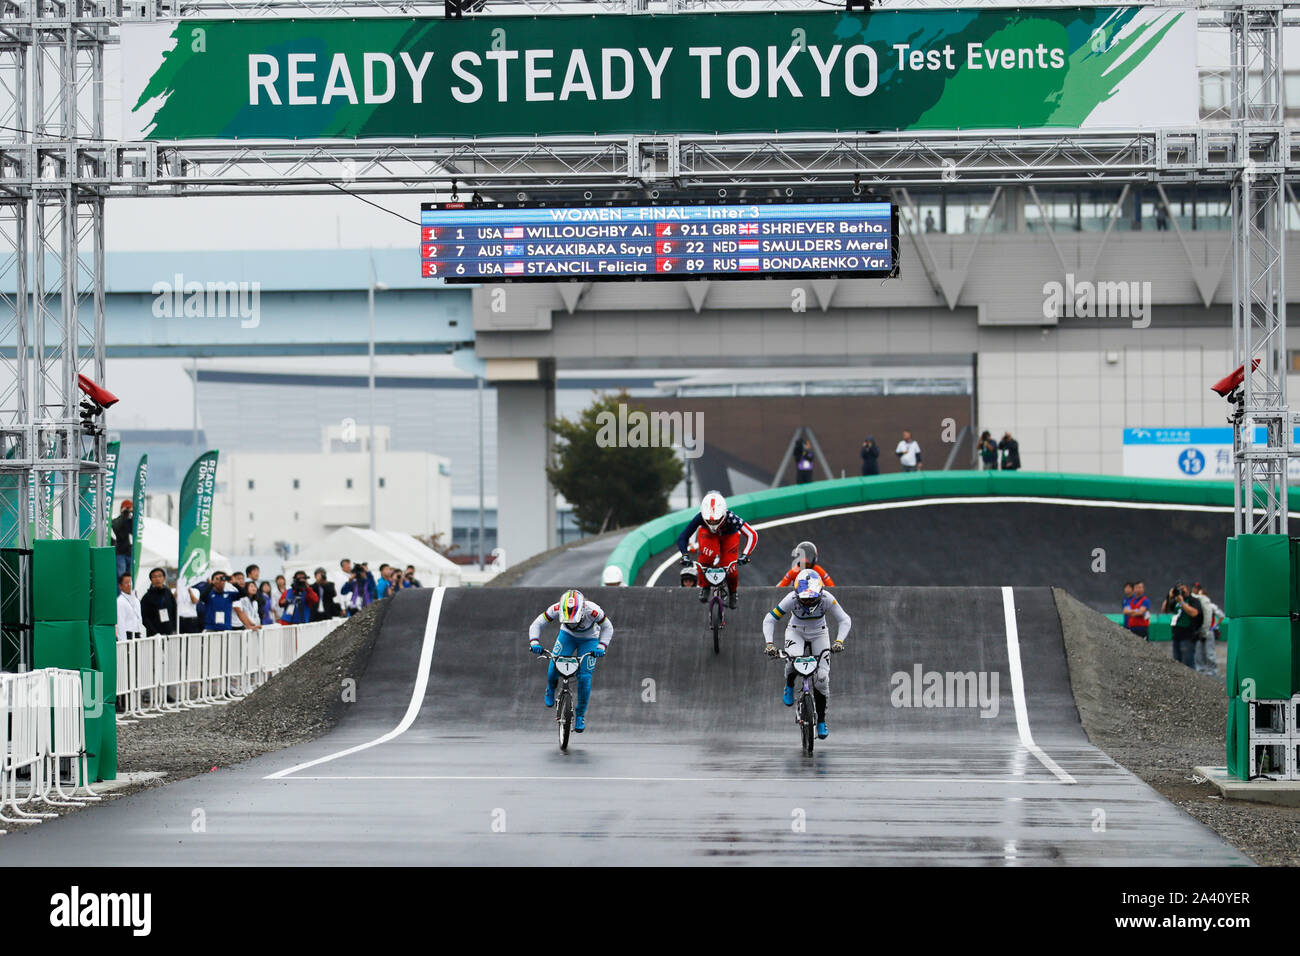 Ariake Urban Sports Park, Tokyo, Japan. 11th Oct, 2019. (L to R) Willoughby Alise (USA), Stancil Felicia (USA), Saya Sakakibara (AUS), OCTOBER 11, 2019 - Cycling - BMX : READY STEADY TOKYO - Cycling (BMX Racing) Woen's BMX Race Final at Ariake Urban Sports Park, Tokyo, Japan. Credit: Naoki Morita/AFLO SPORT/Alamy Live News Stock Photo